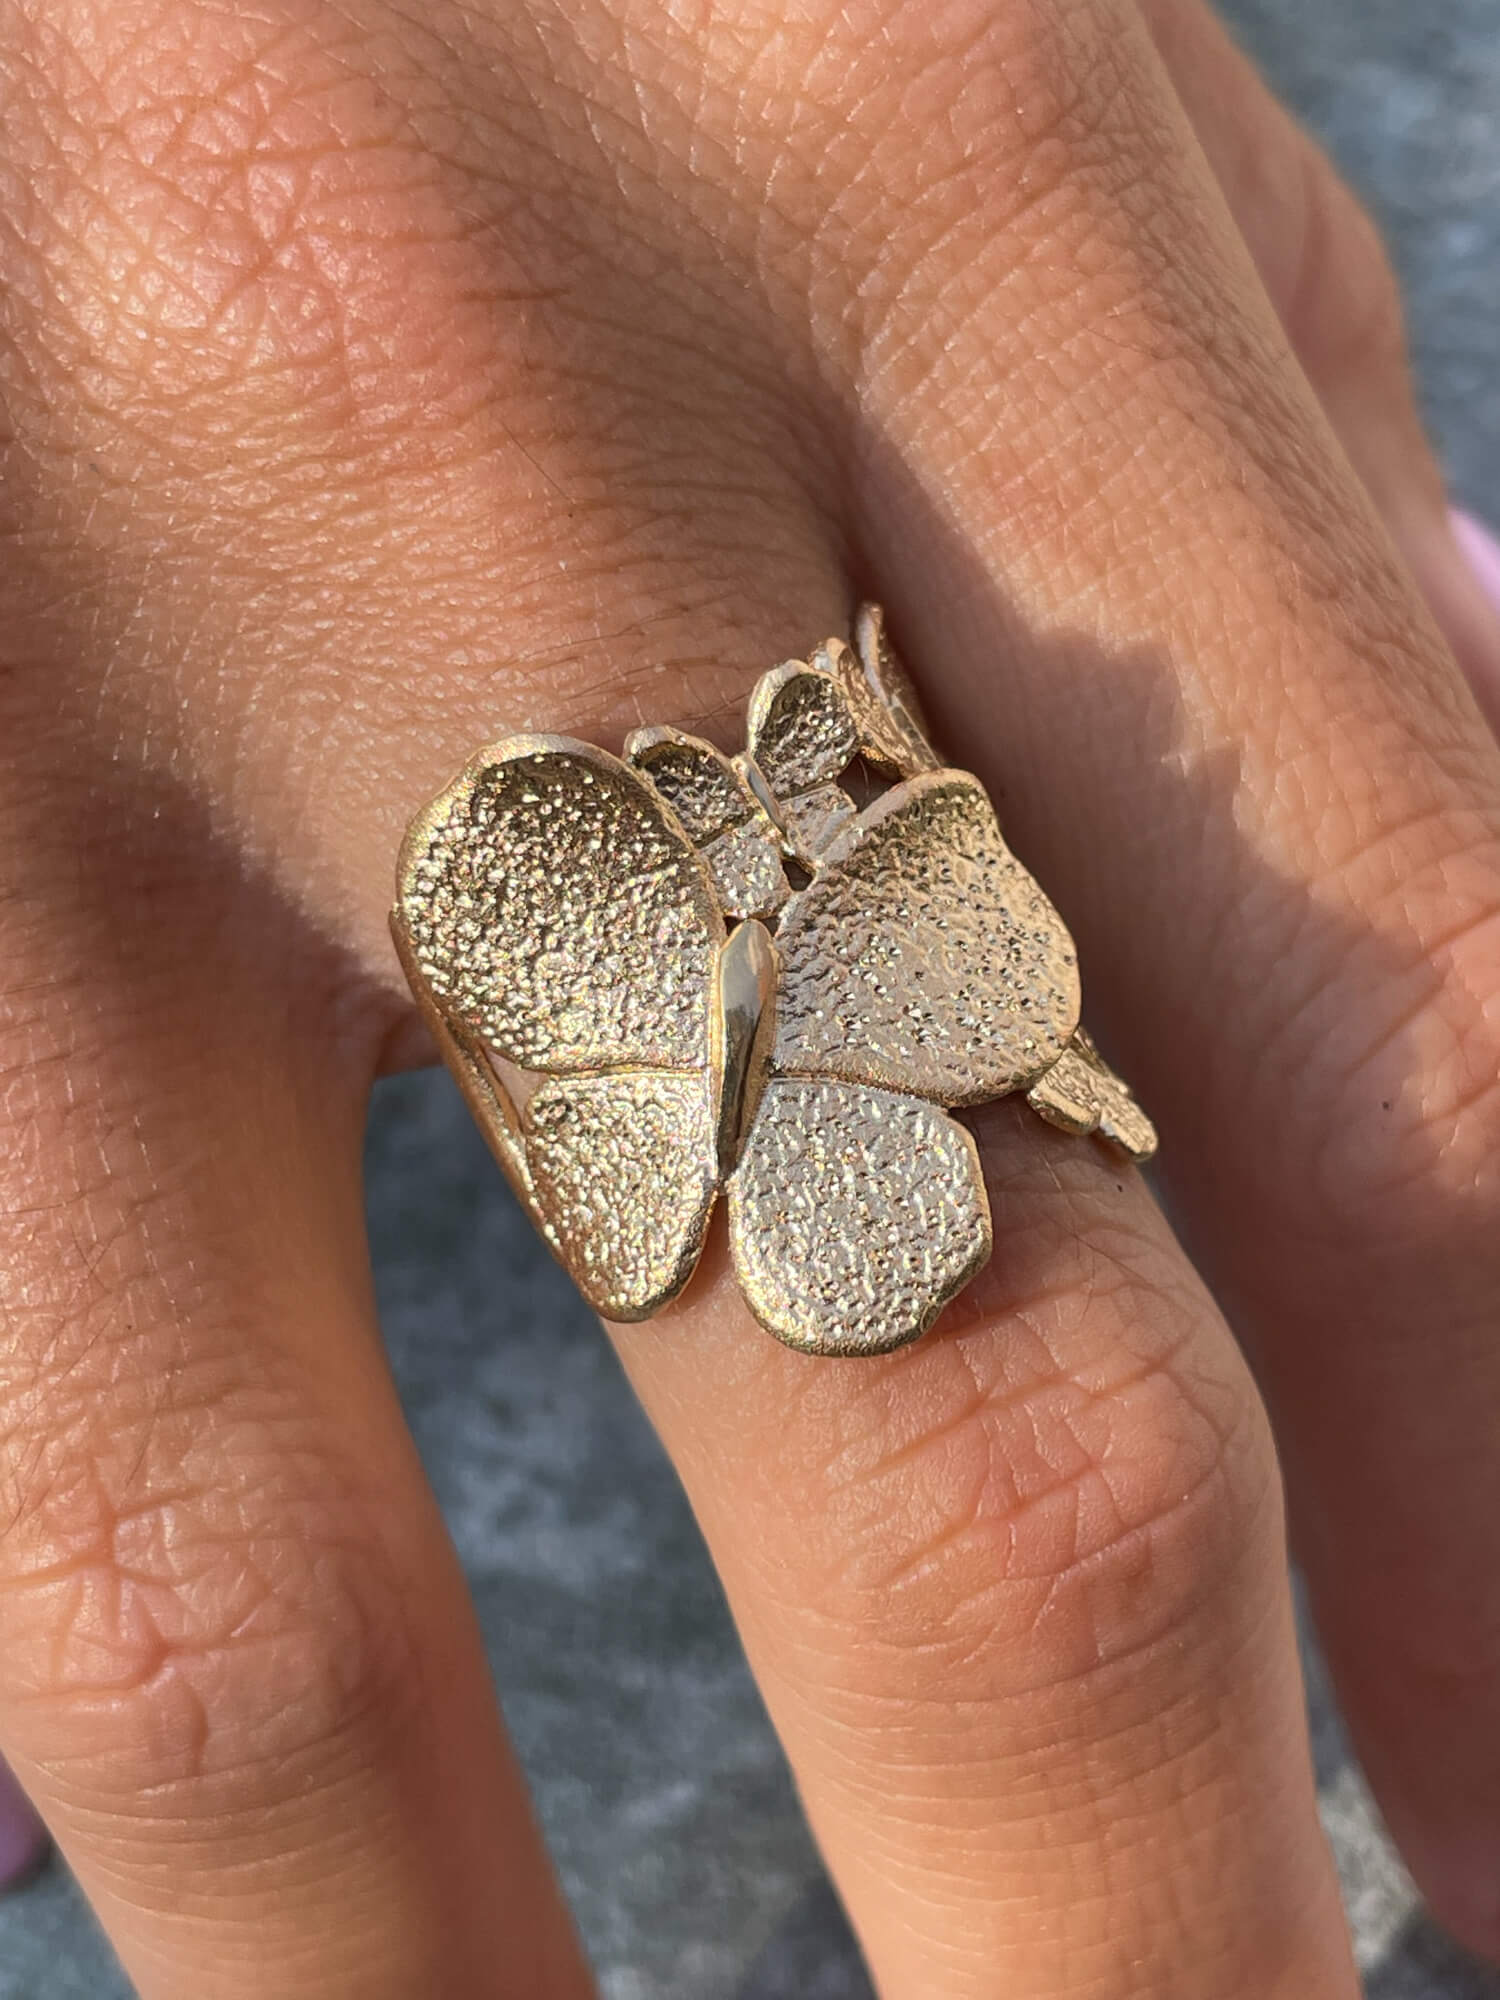 Smaller gilt butterfly ring